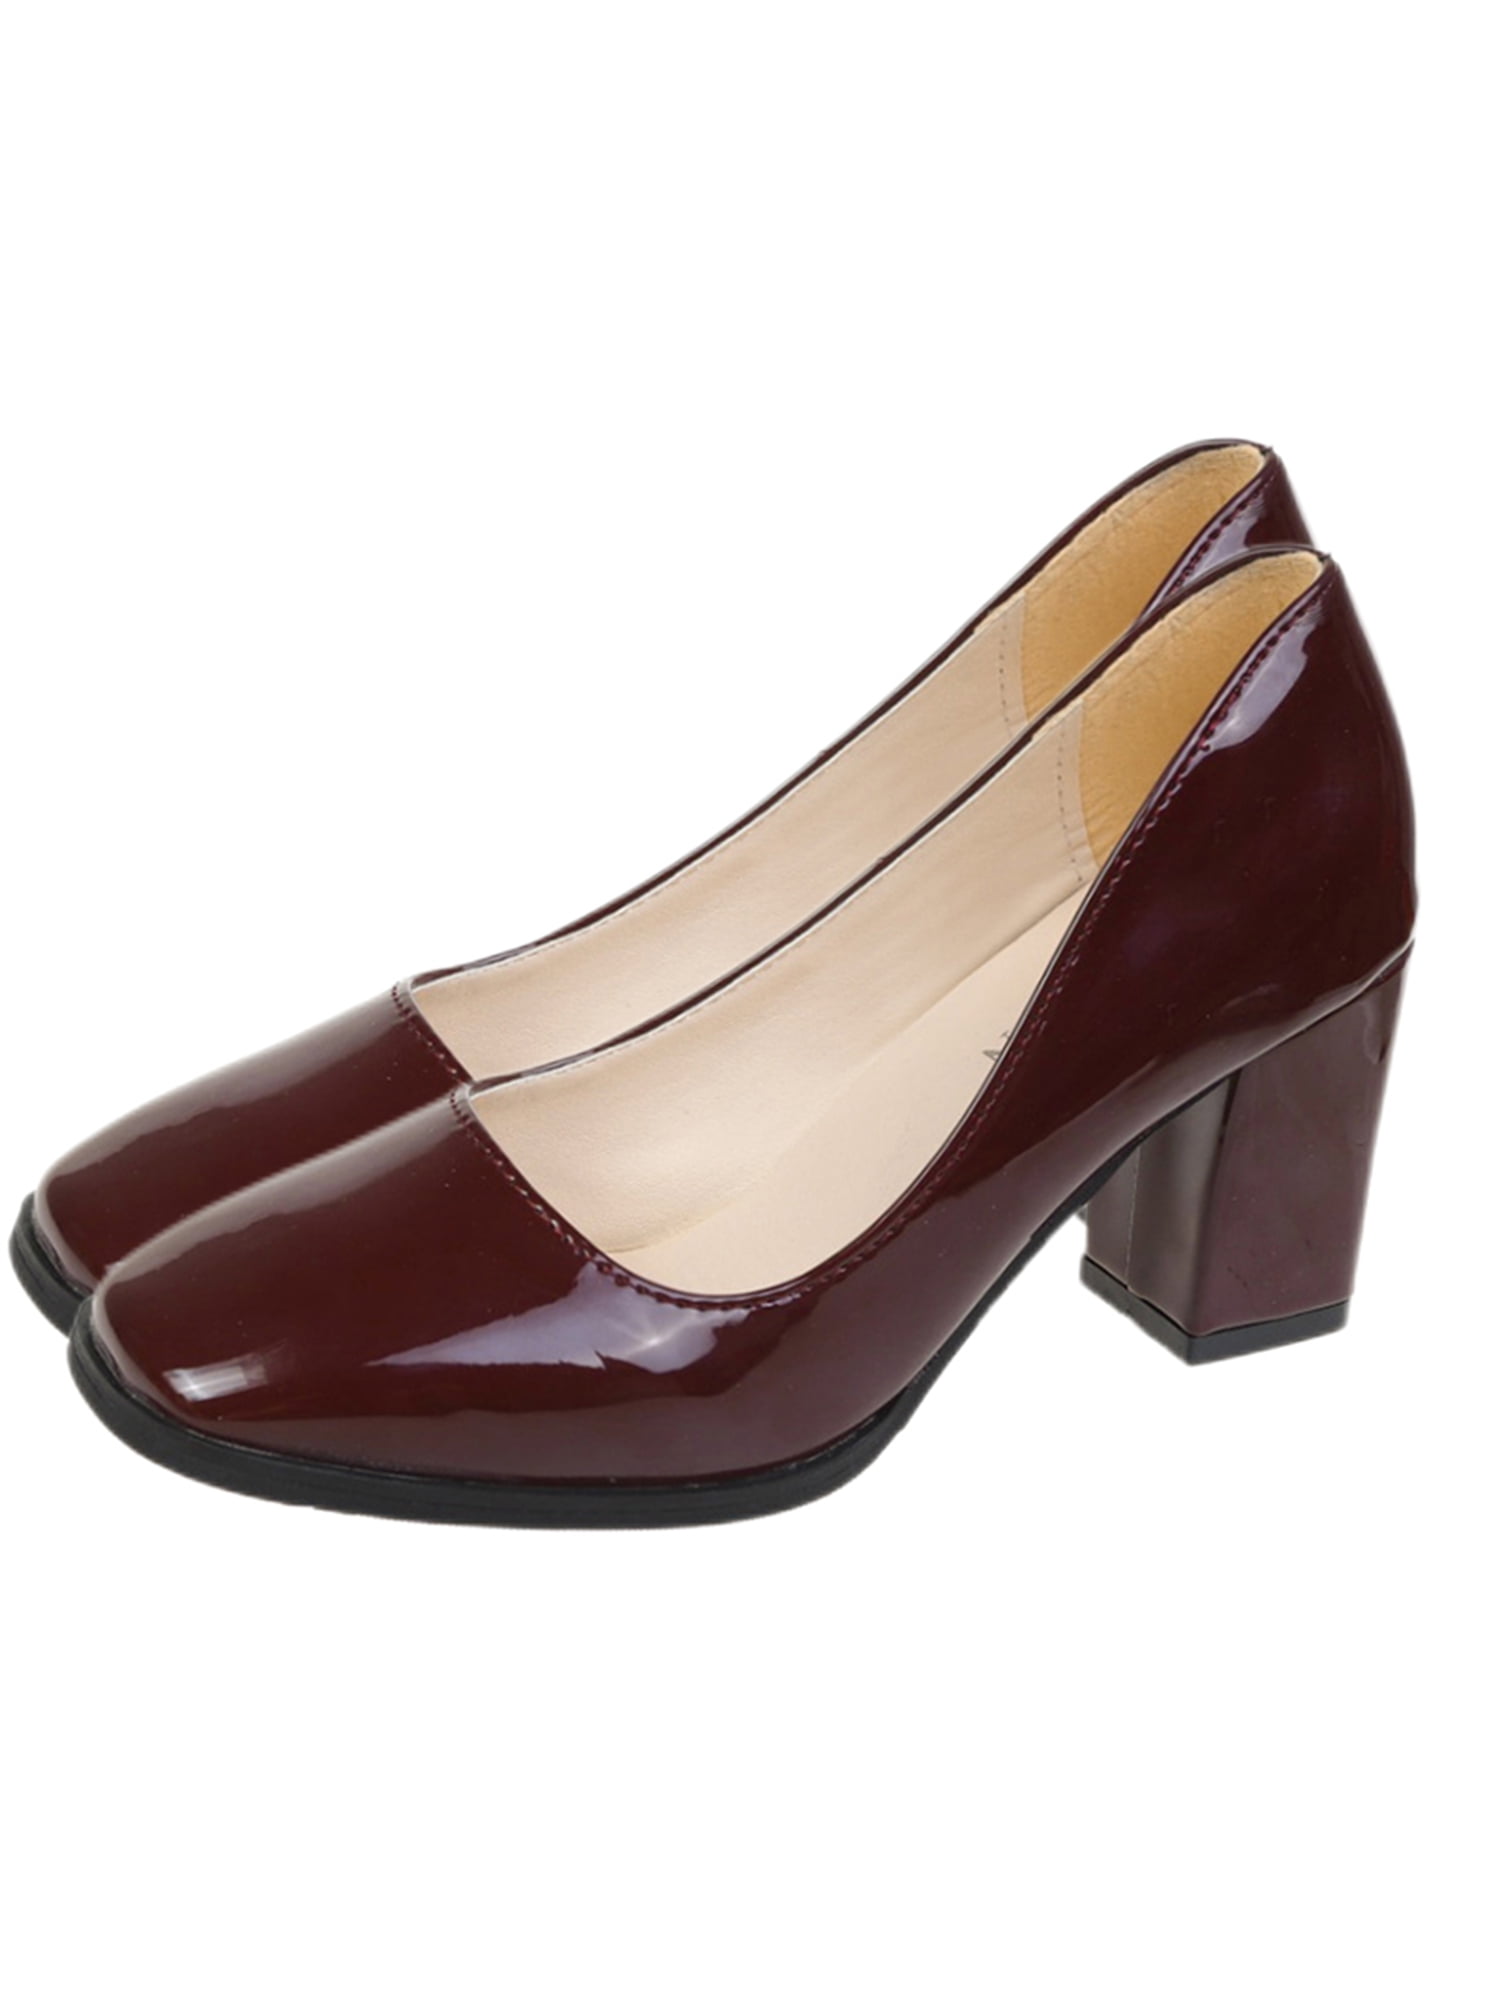 Pikolinos women´s leather pumps on low heel - cognac brown | Robel.shoes